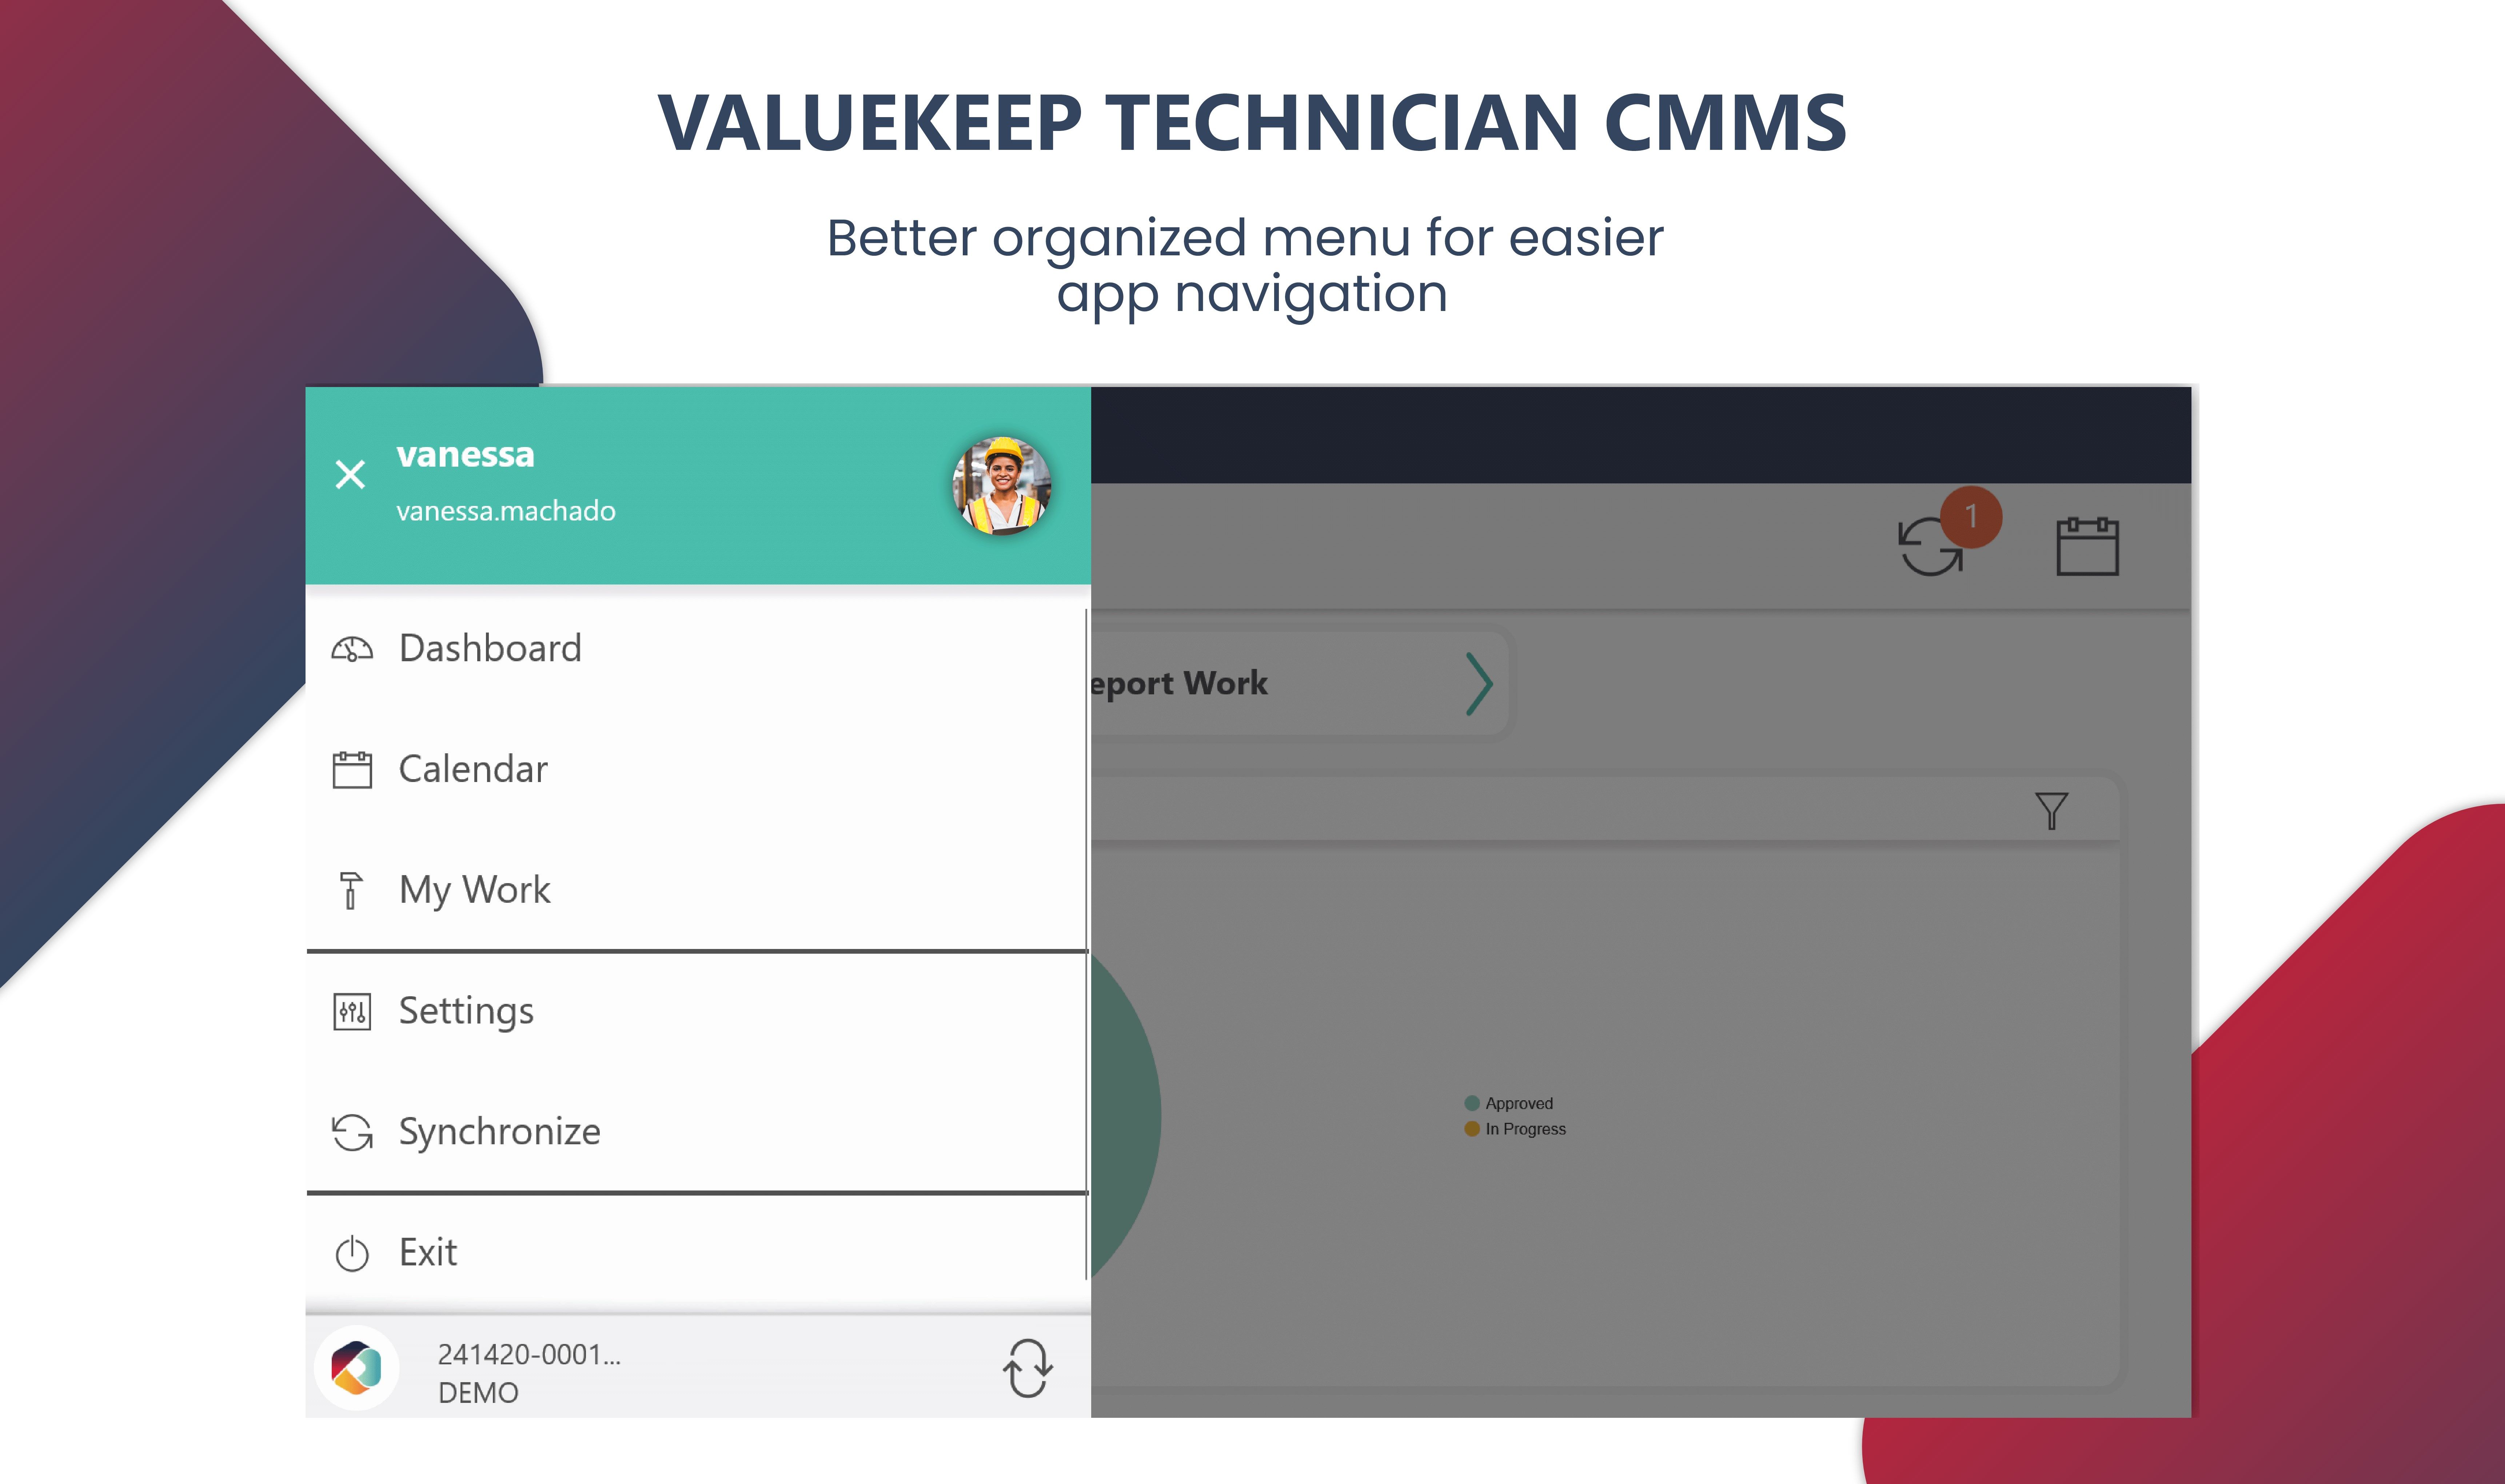 Valuekeep Technician CMMS